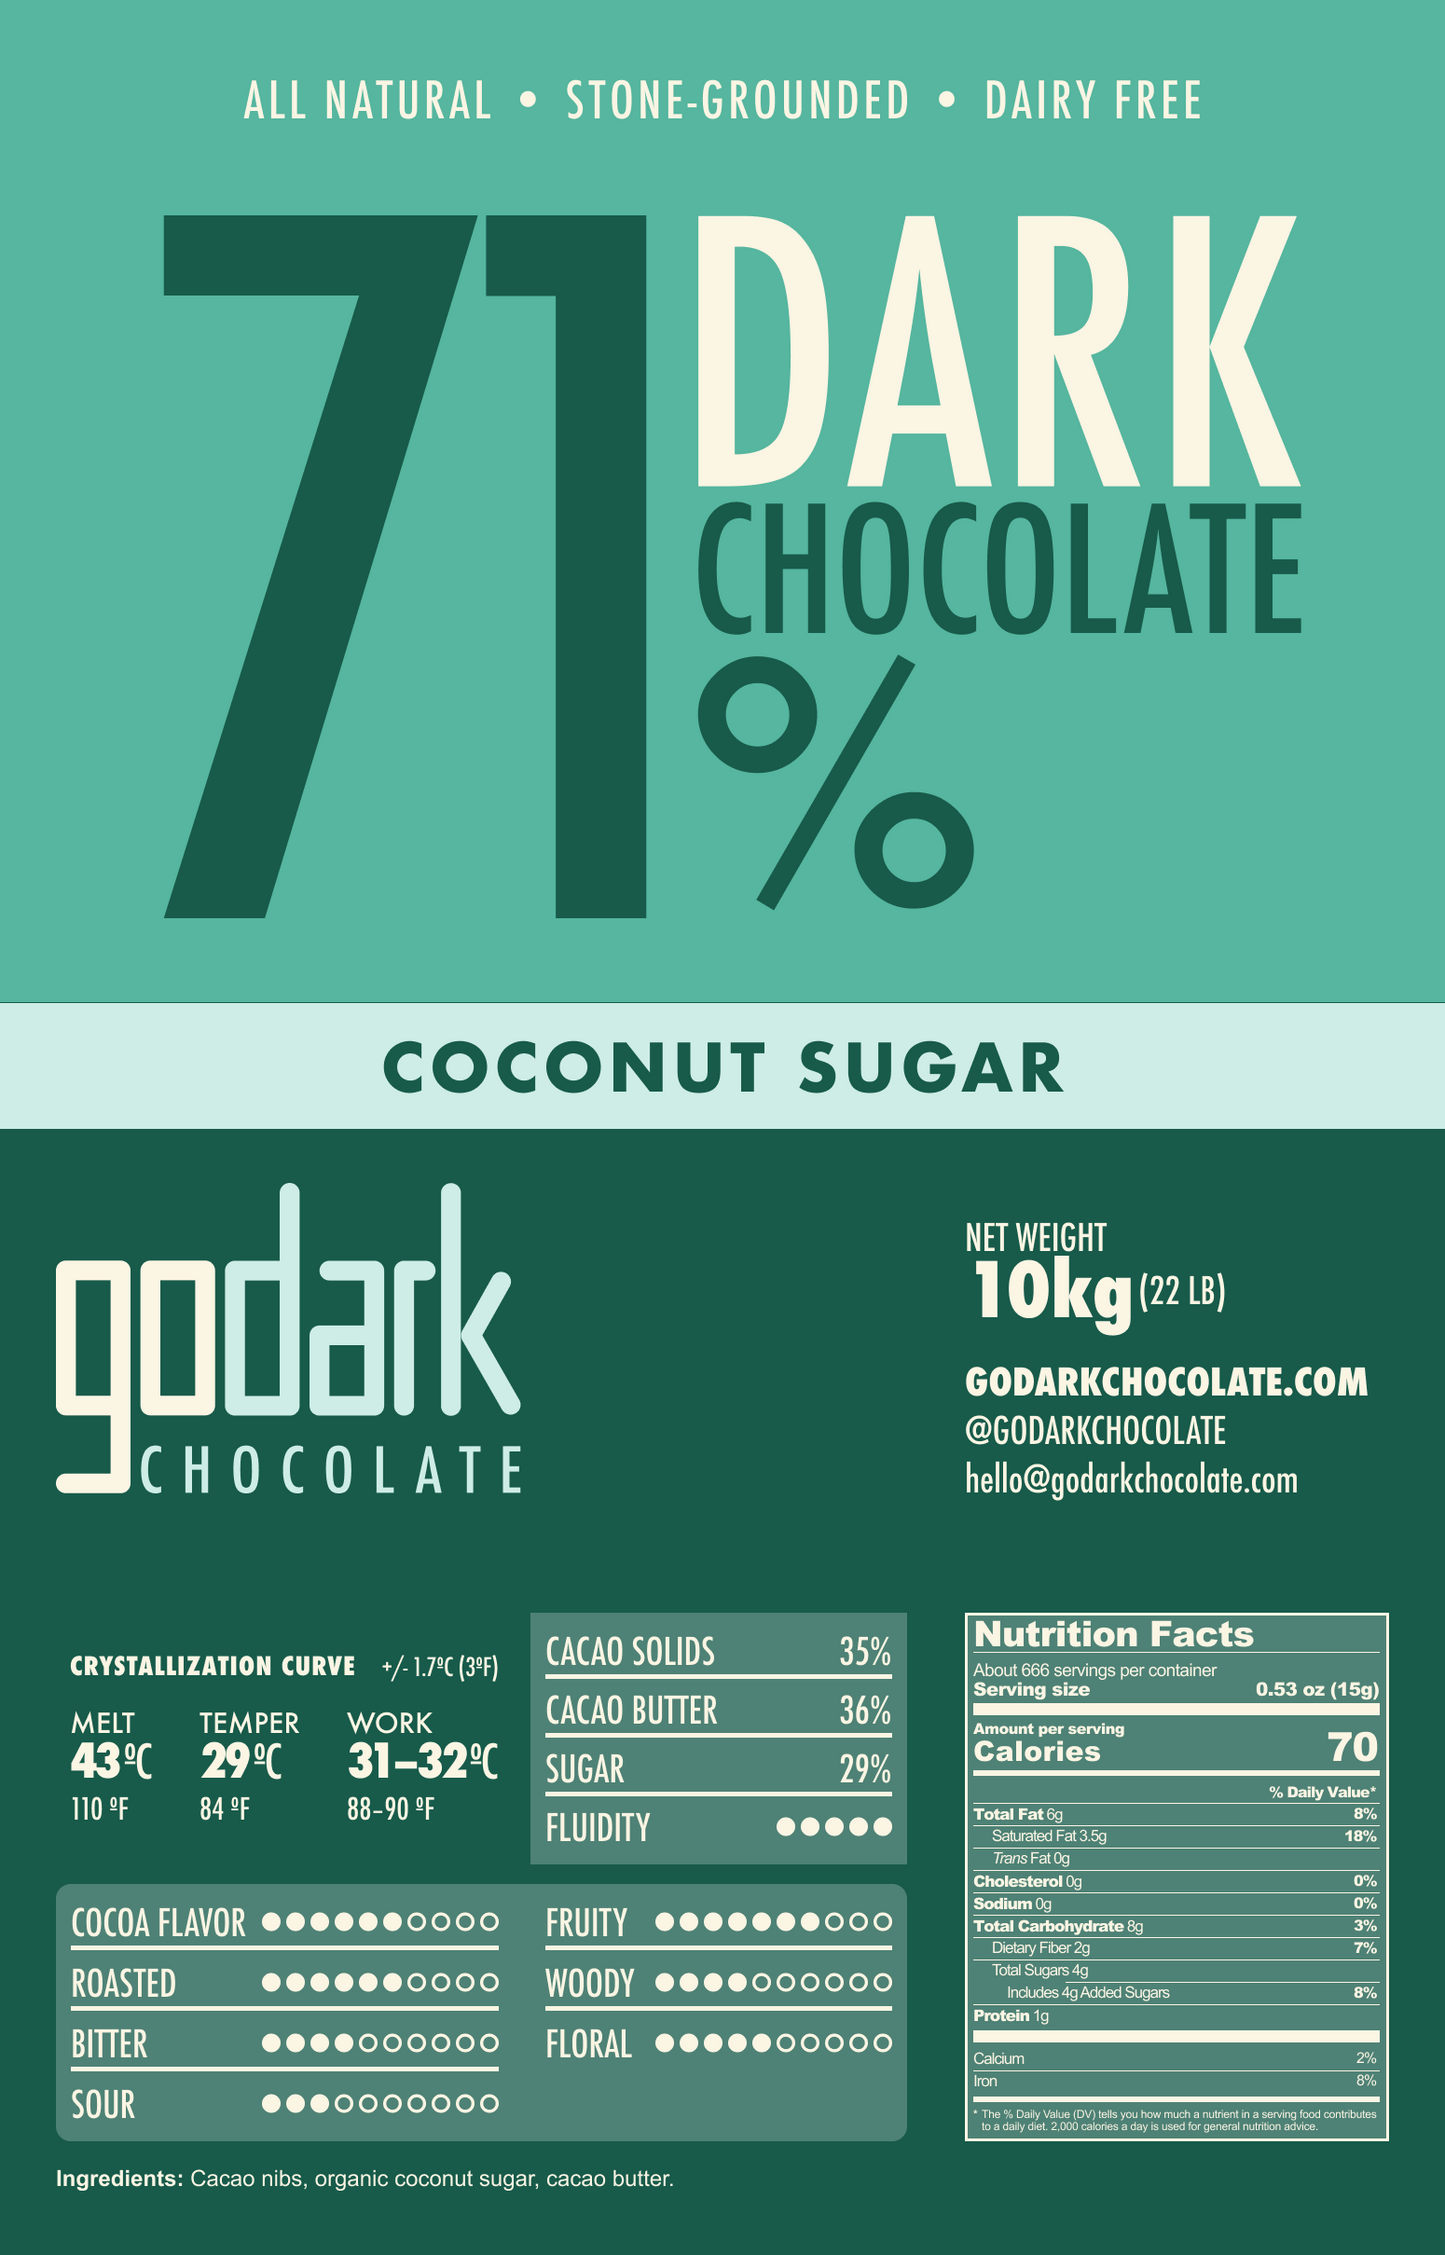 71% Dark chocolate with coconut sugar